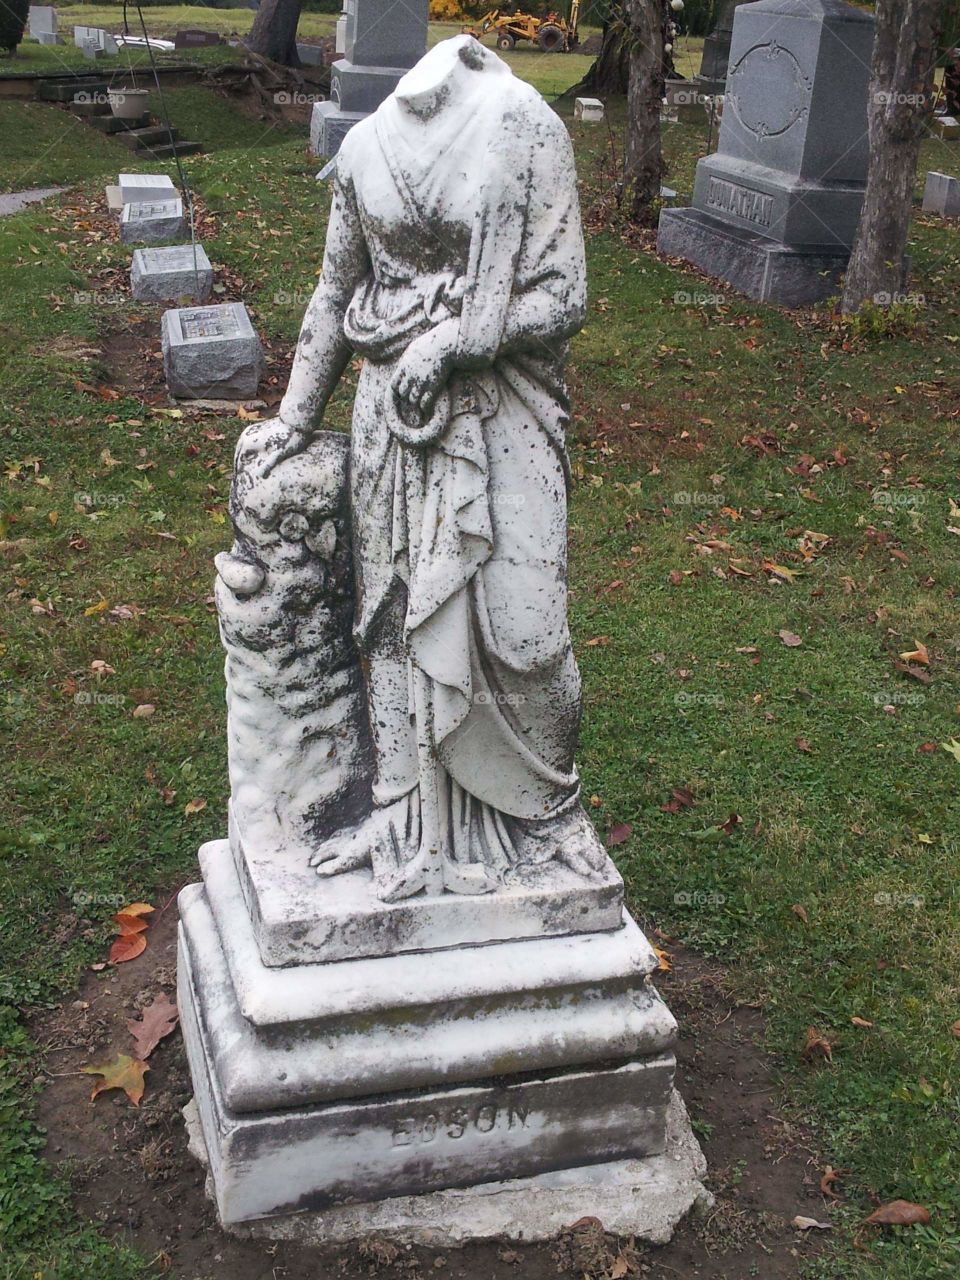 Headless statue in cemetery